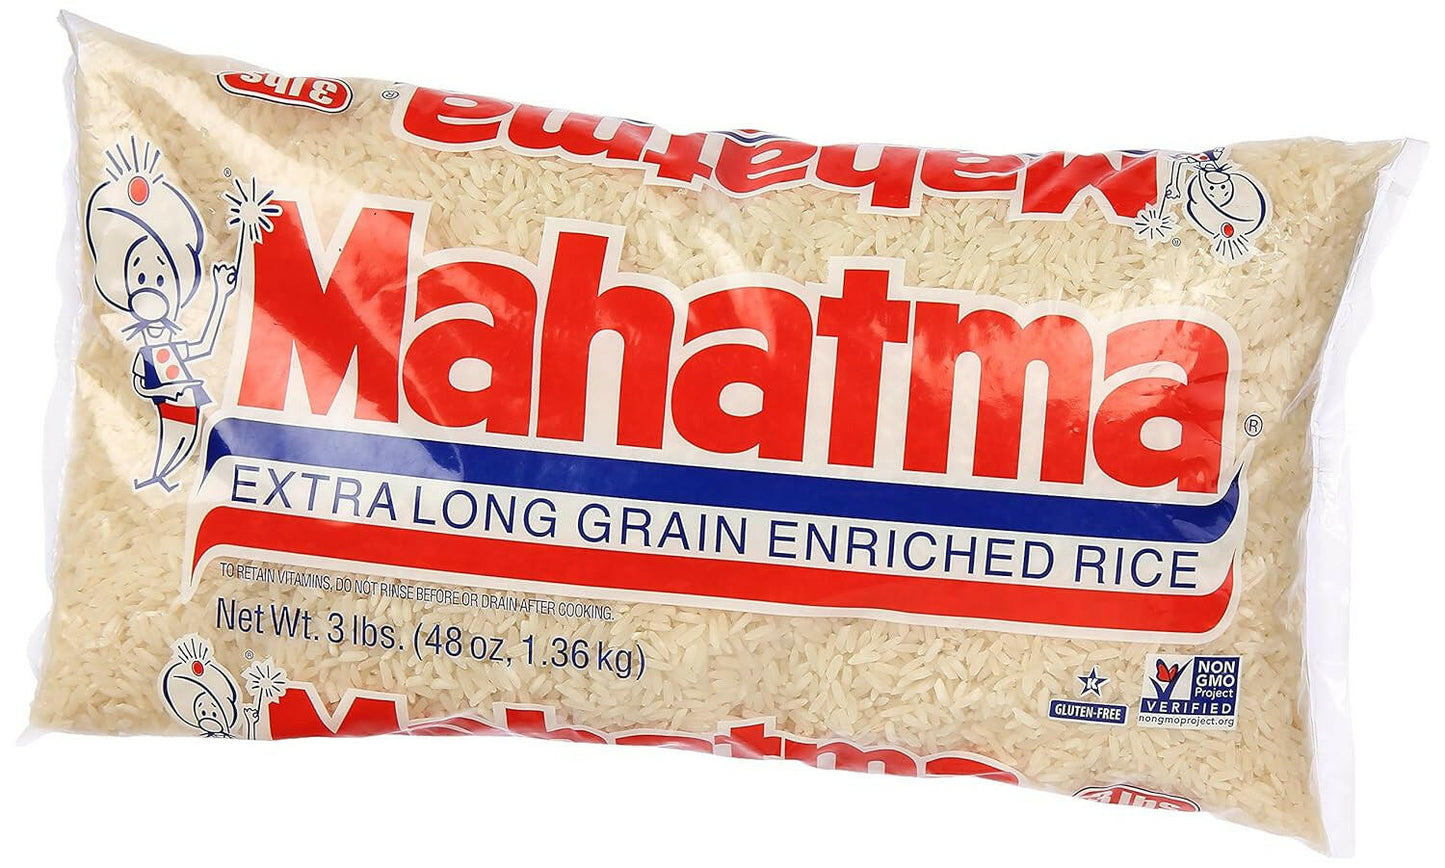 Mahatma Extra Long Grain Enriched Rice 48 oz